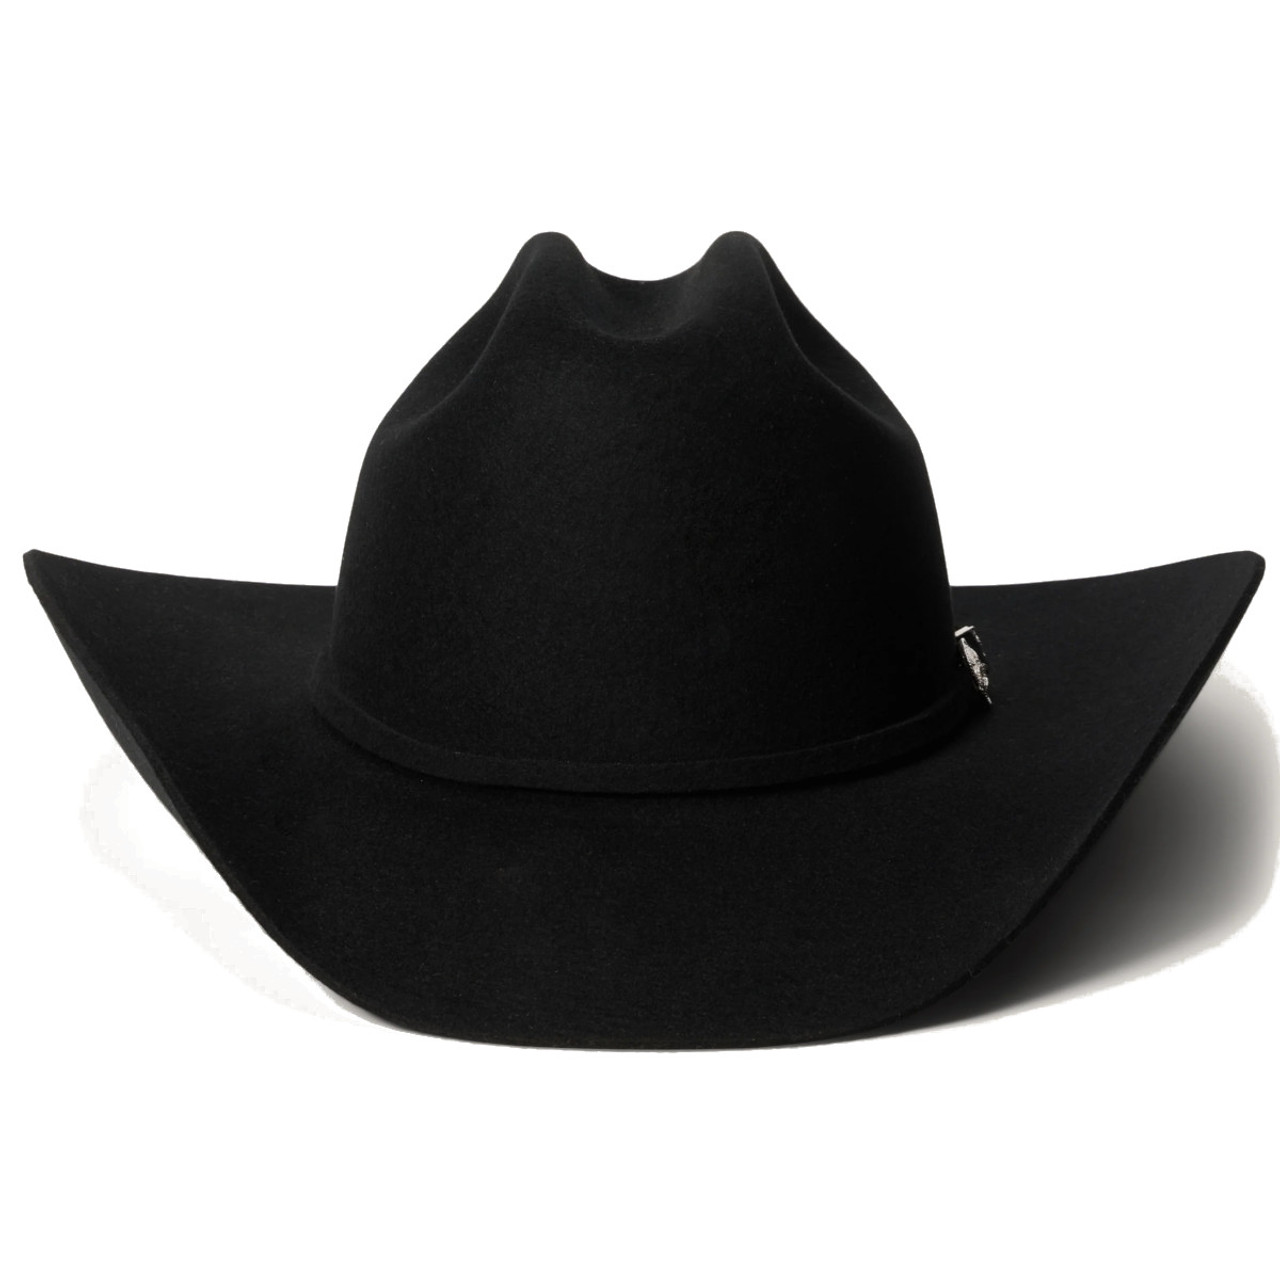 Stetson 4X Corral Hat (Black)